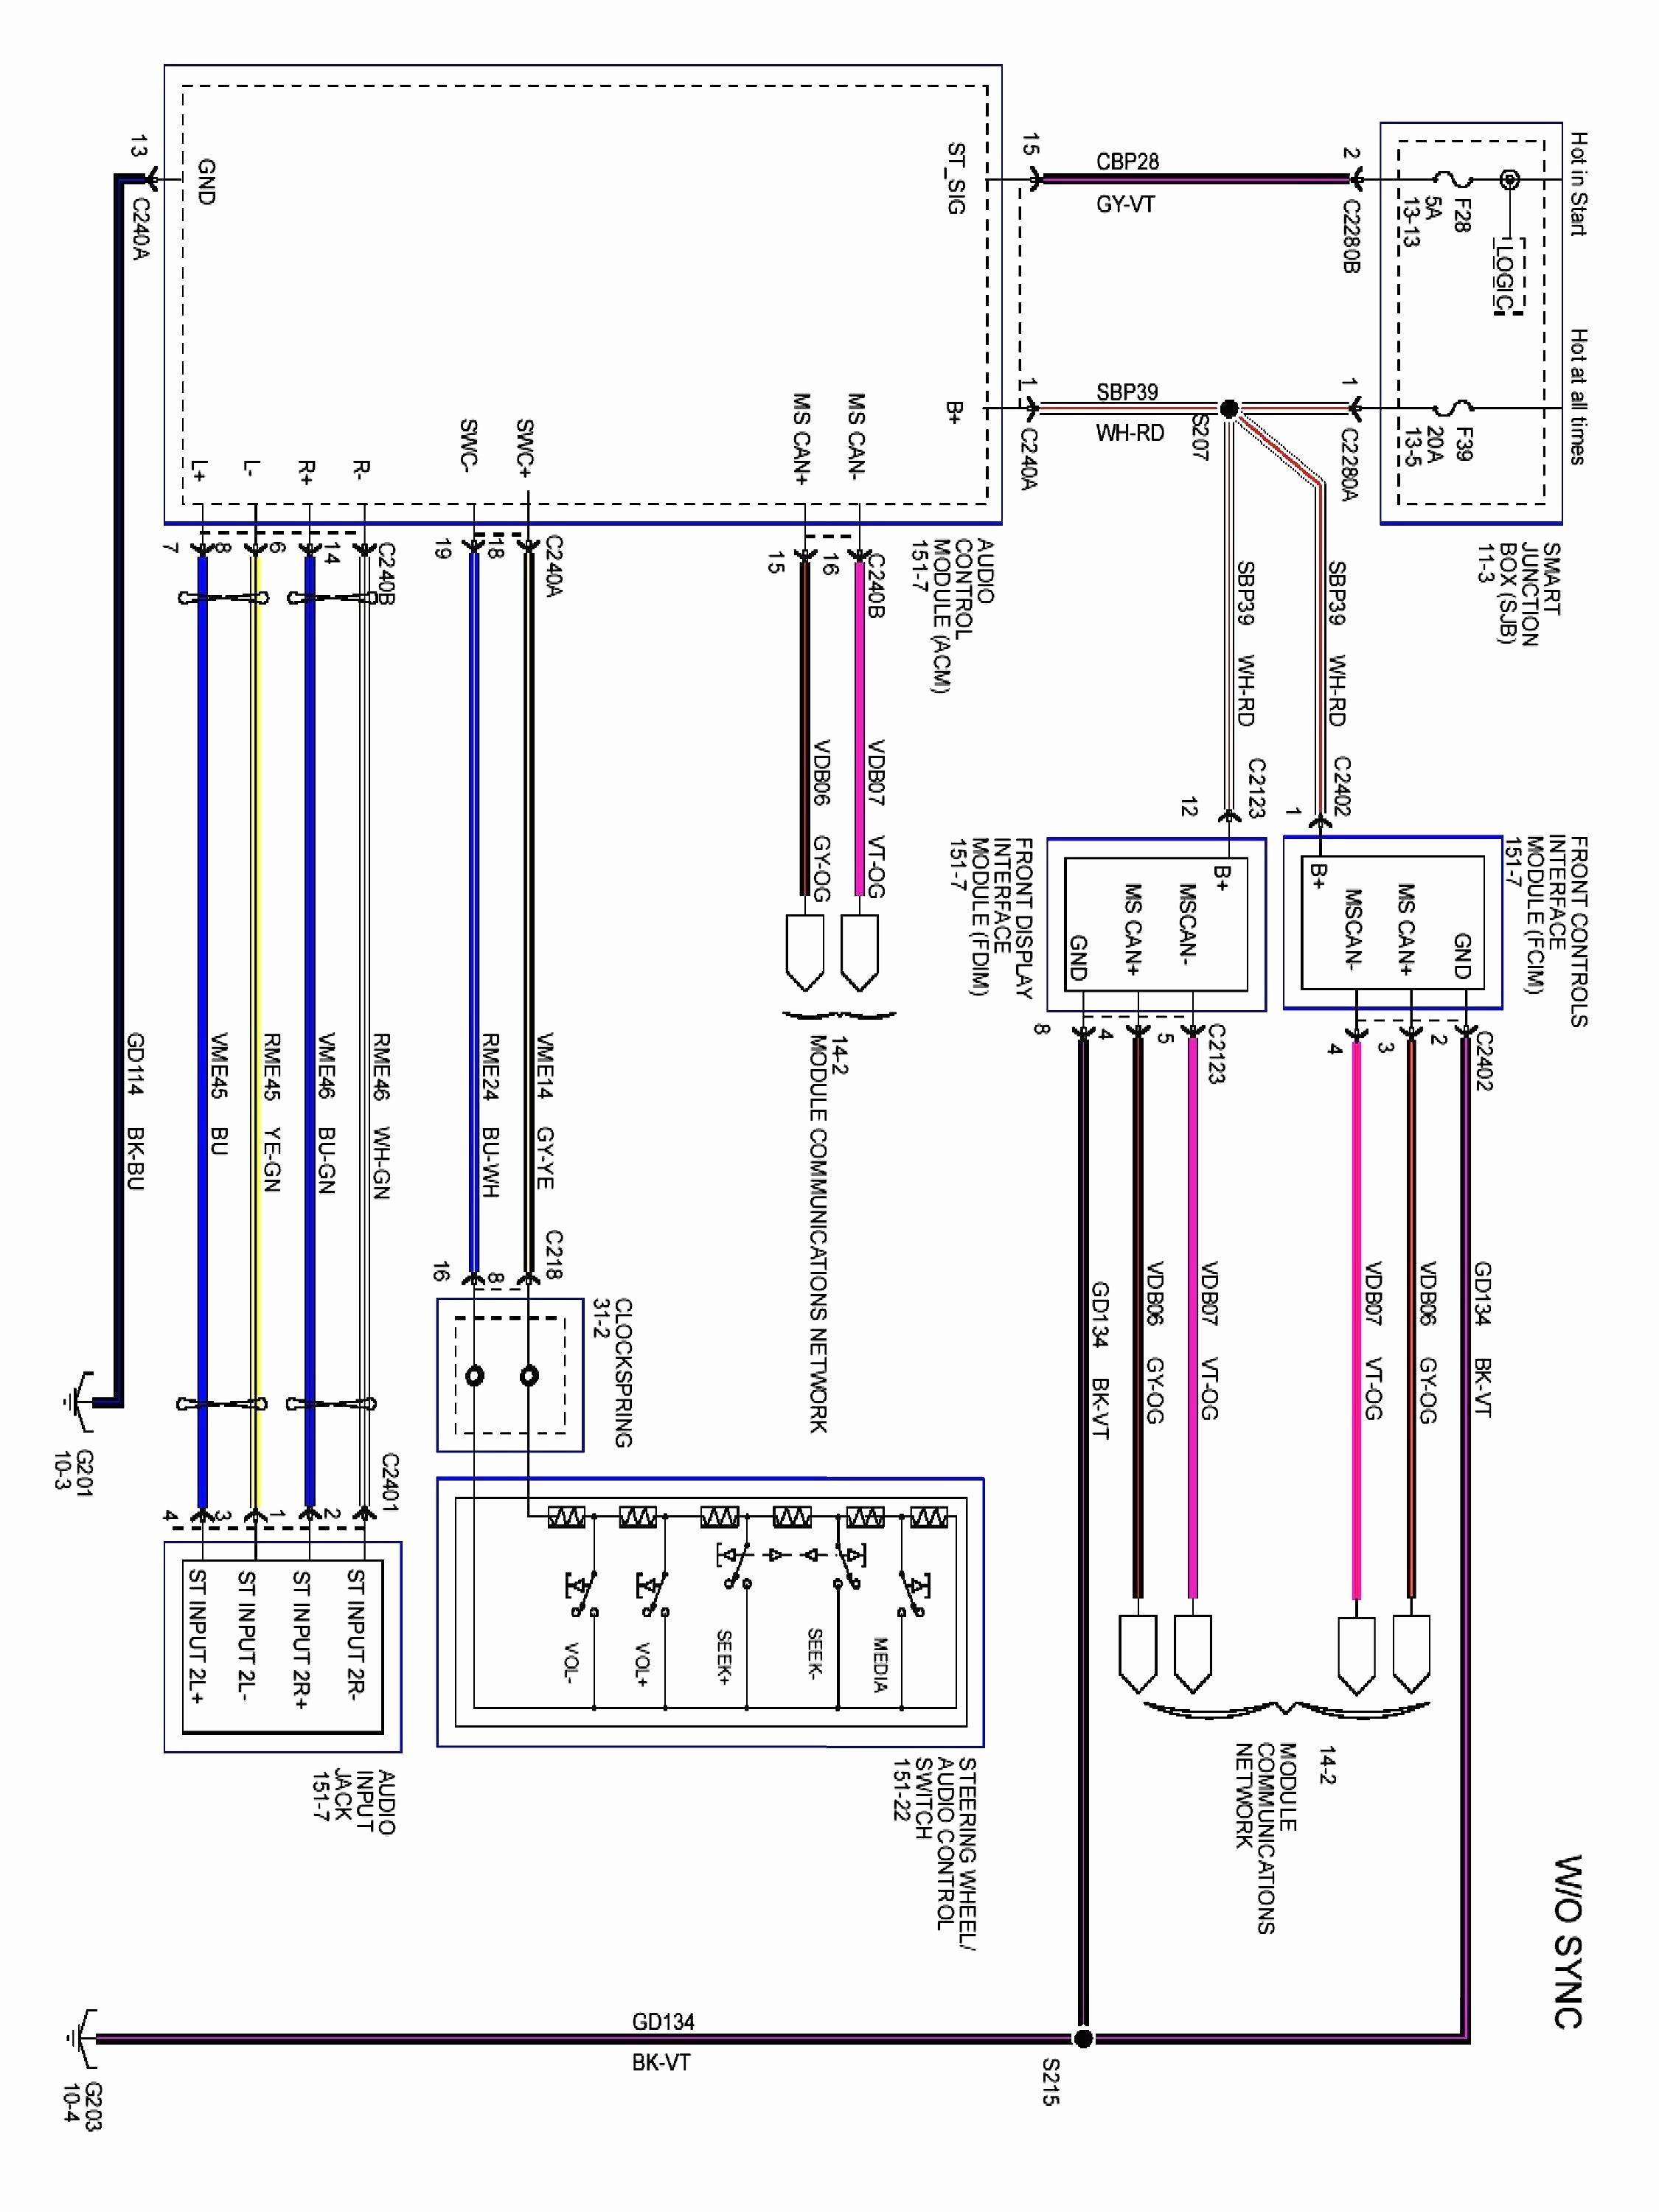 Car Audio System Wiring Diagram Wiring Diagram for Car Audio System New Wiring Diagram for Amplifier Of Car Audio System Wiring Diagram